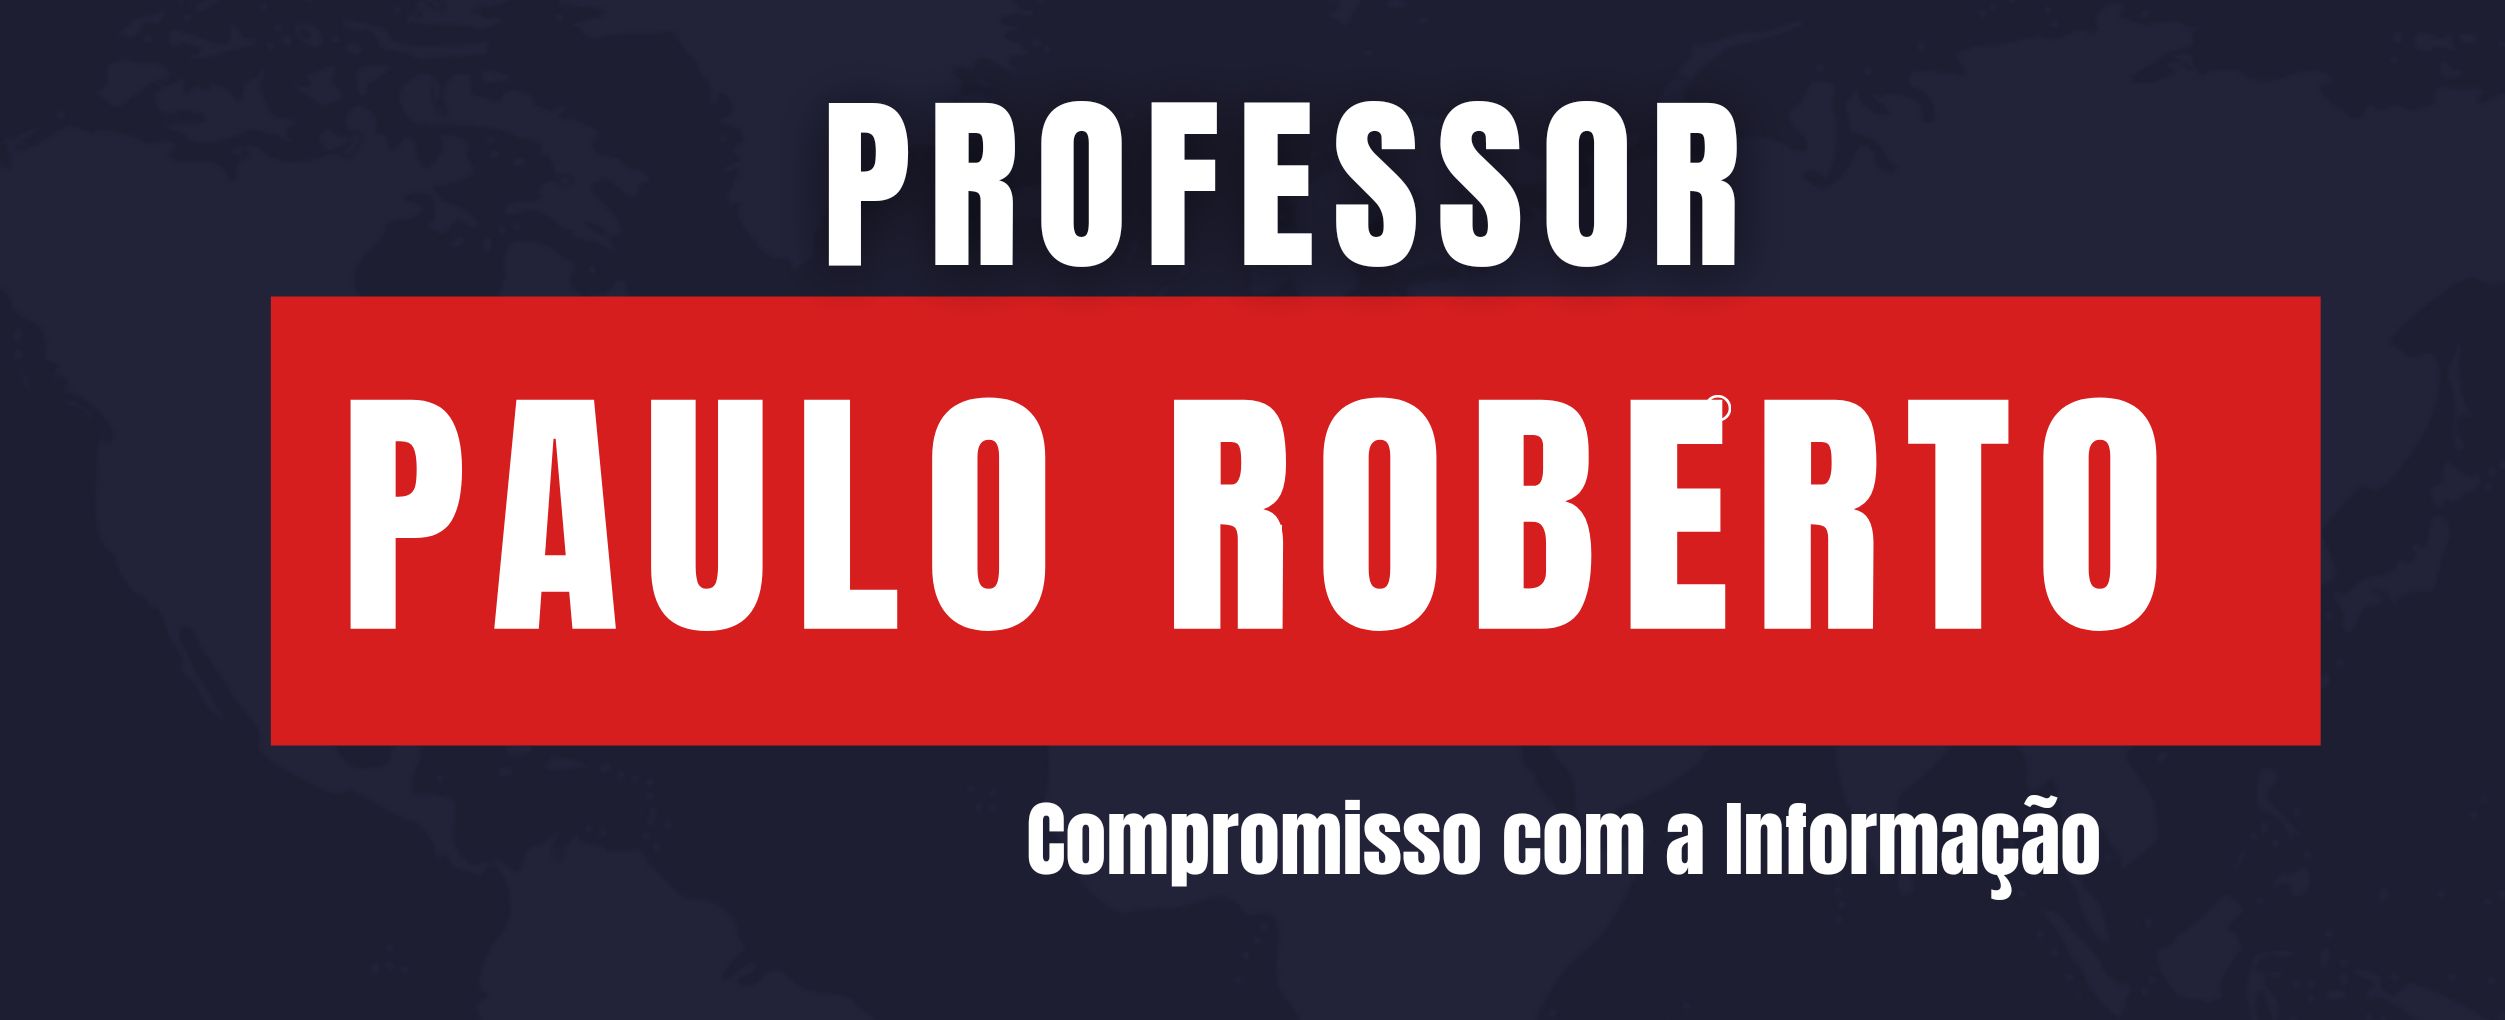  Professor Paulo Roberto